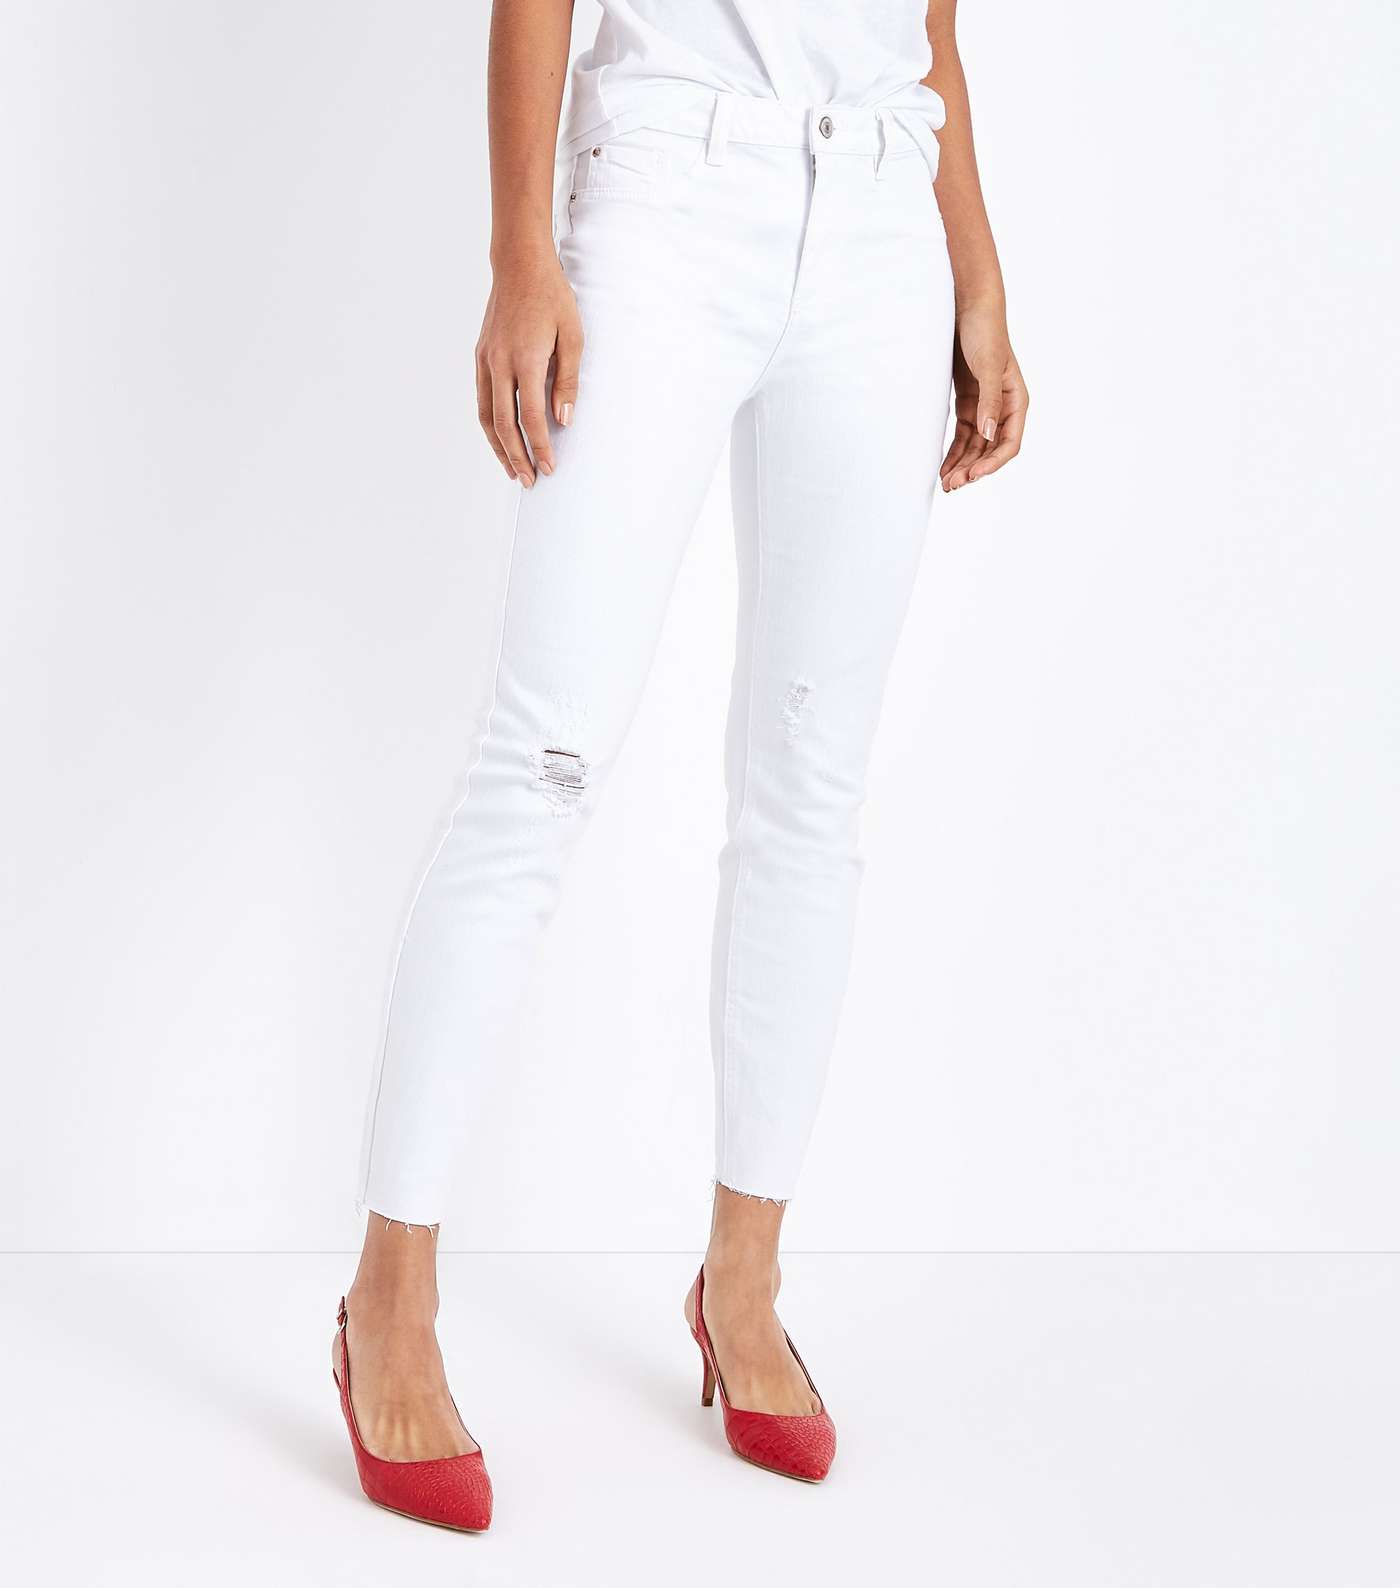 White Ripped Skinny Jenna Jeans Image 2